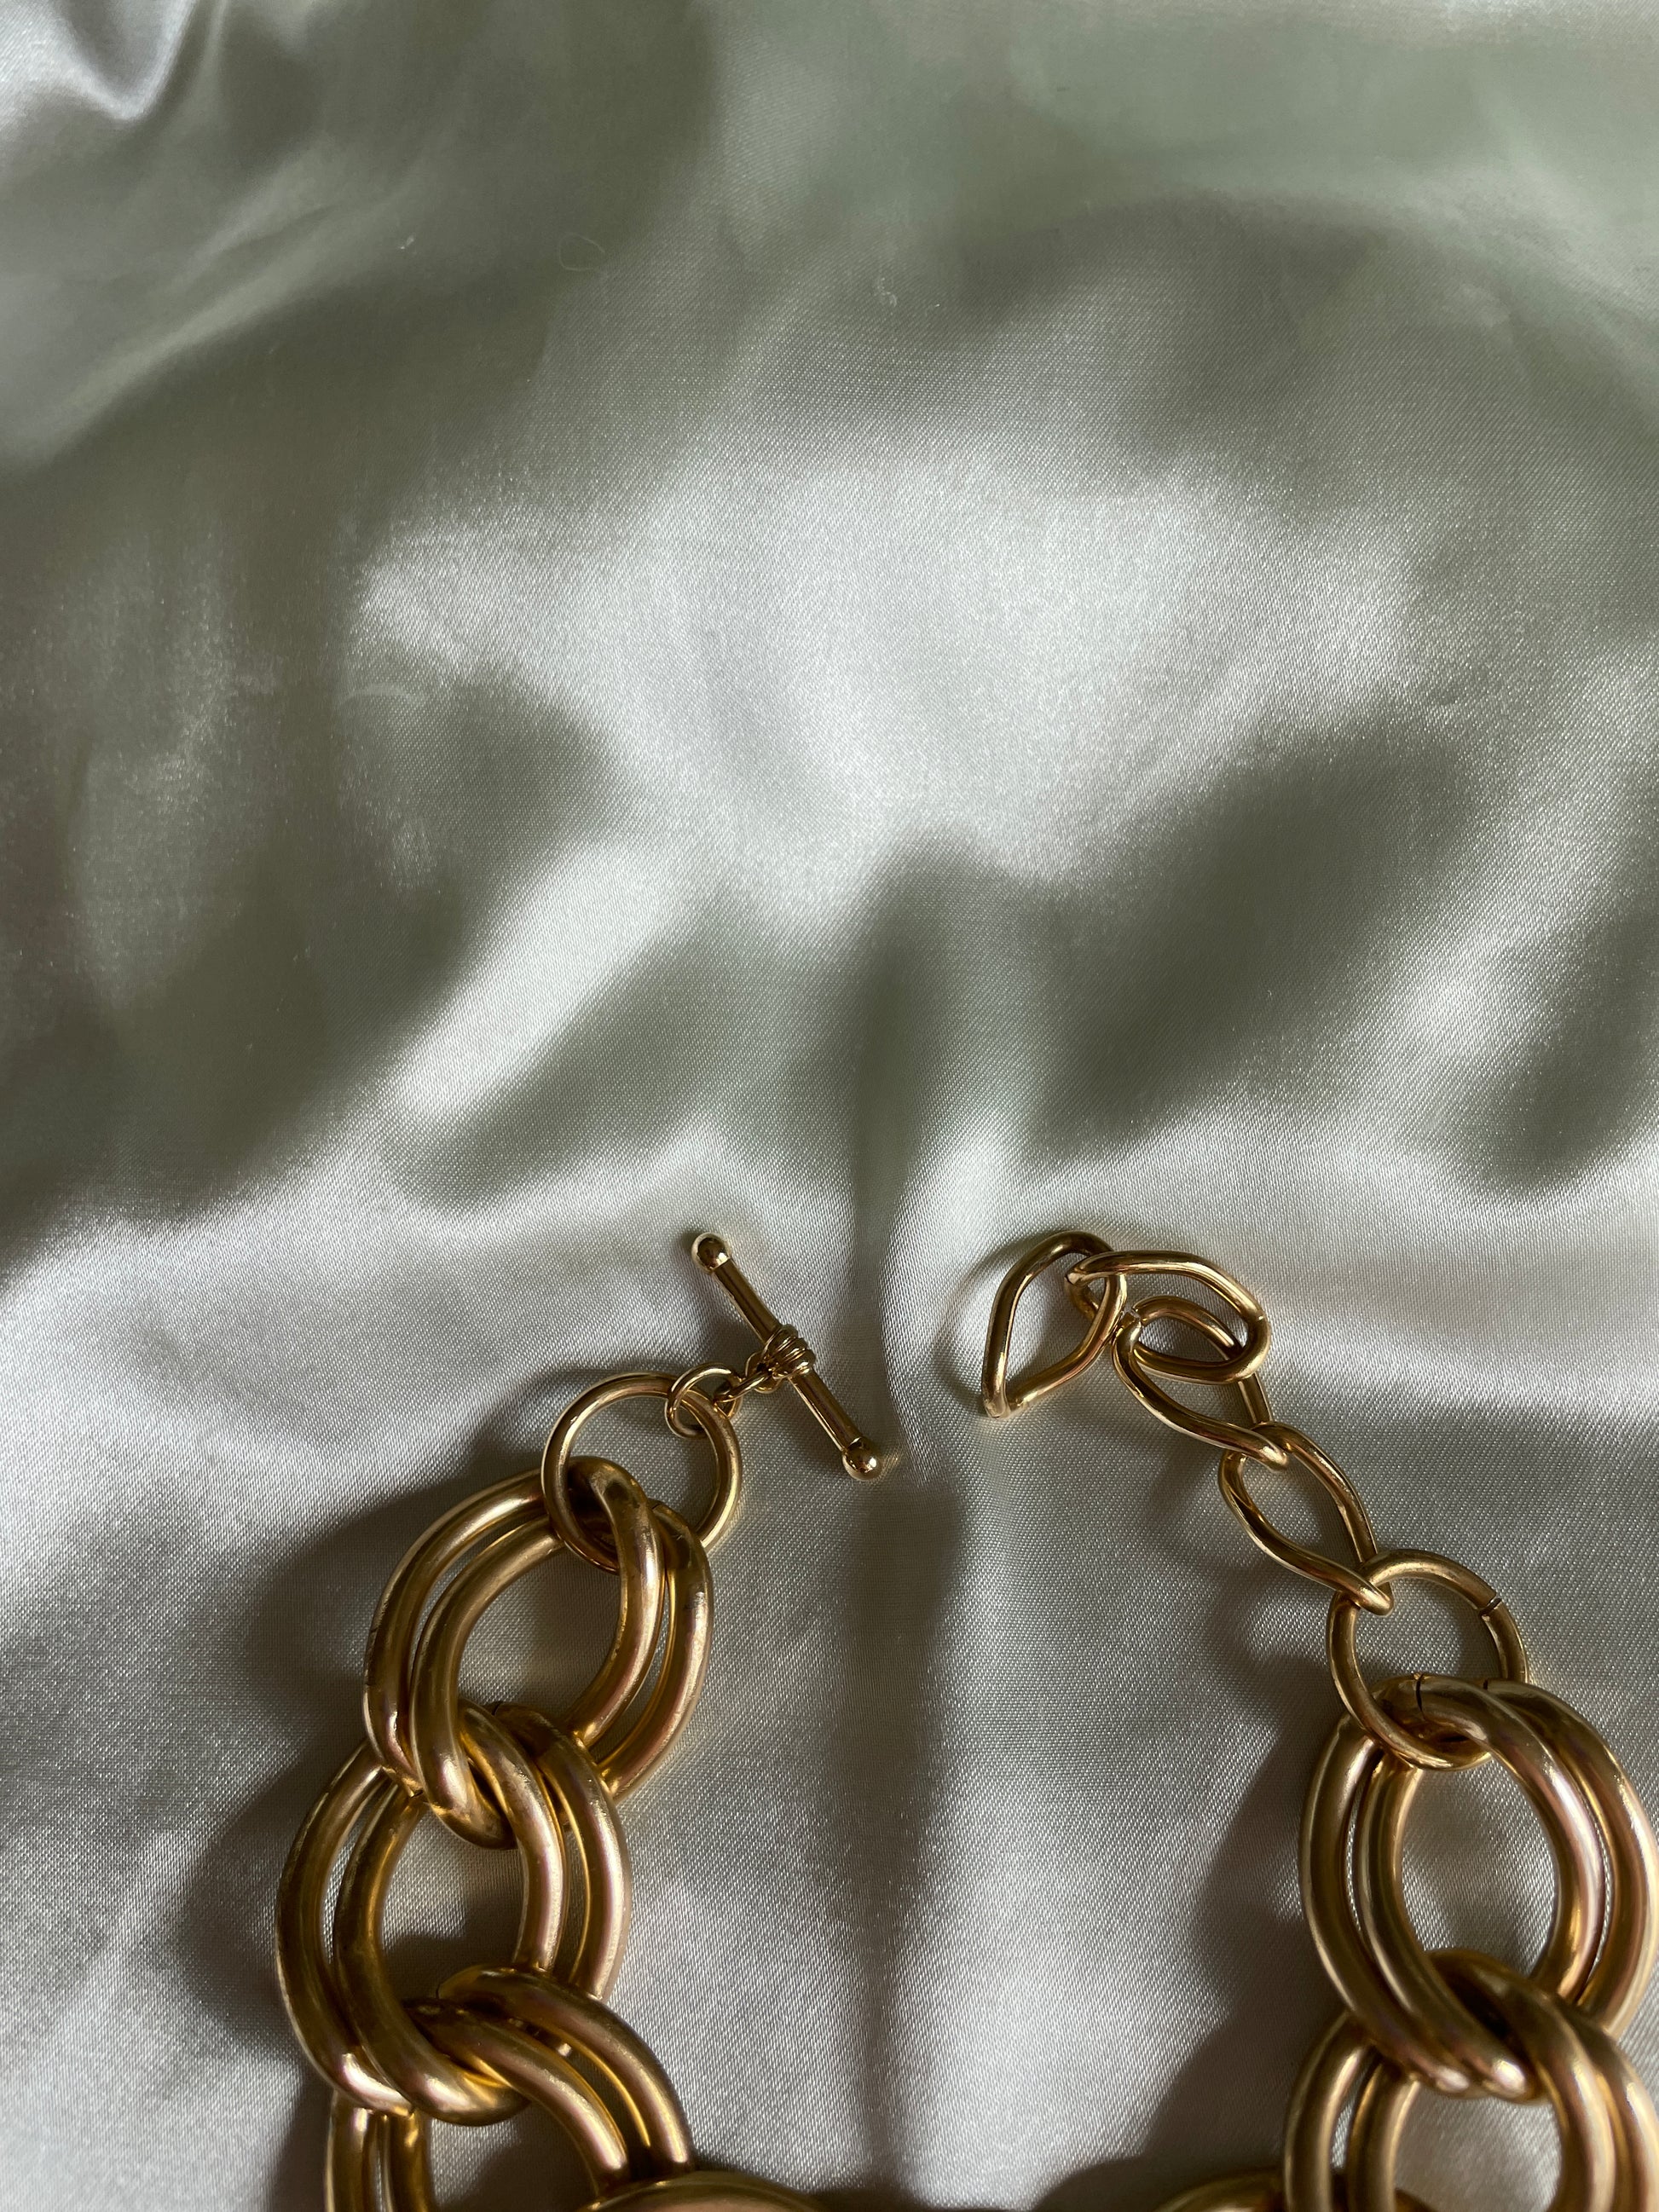  90s Gold Tone Double Link Chain Bracelet